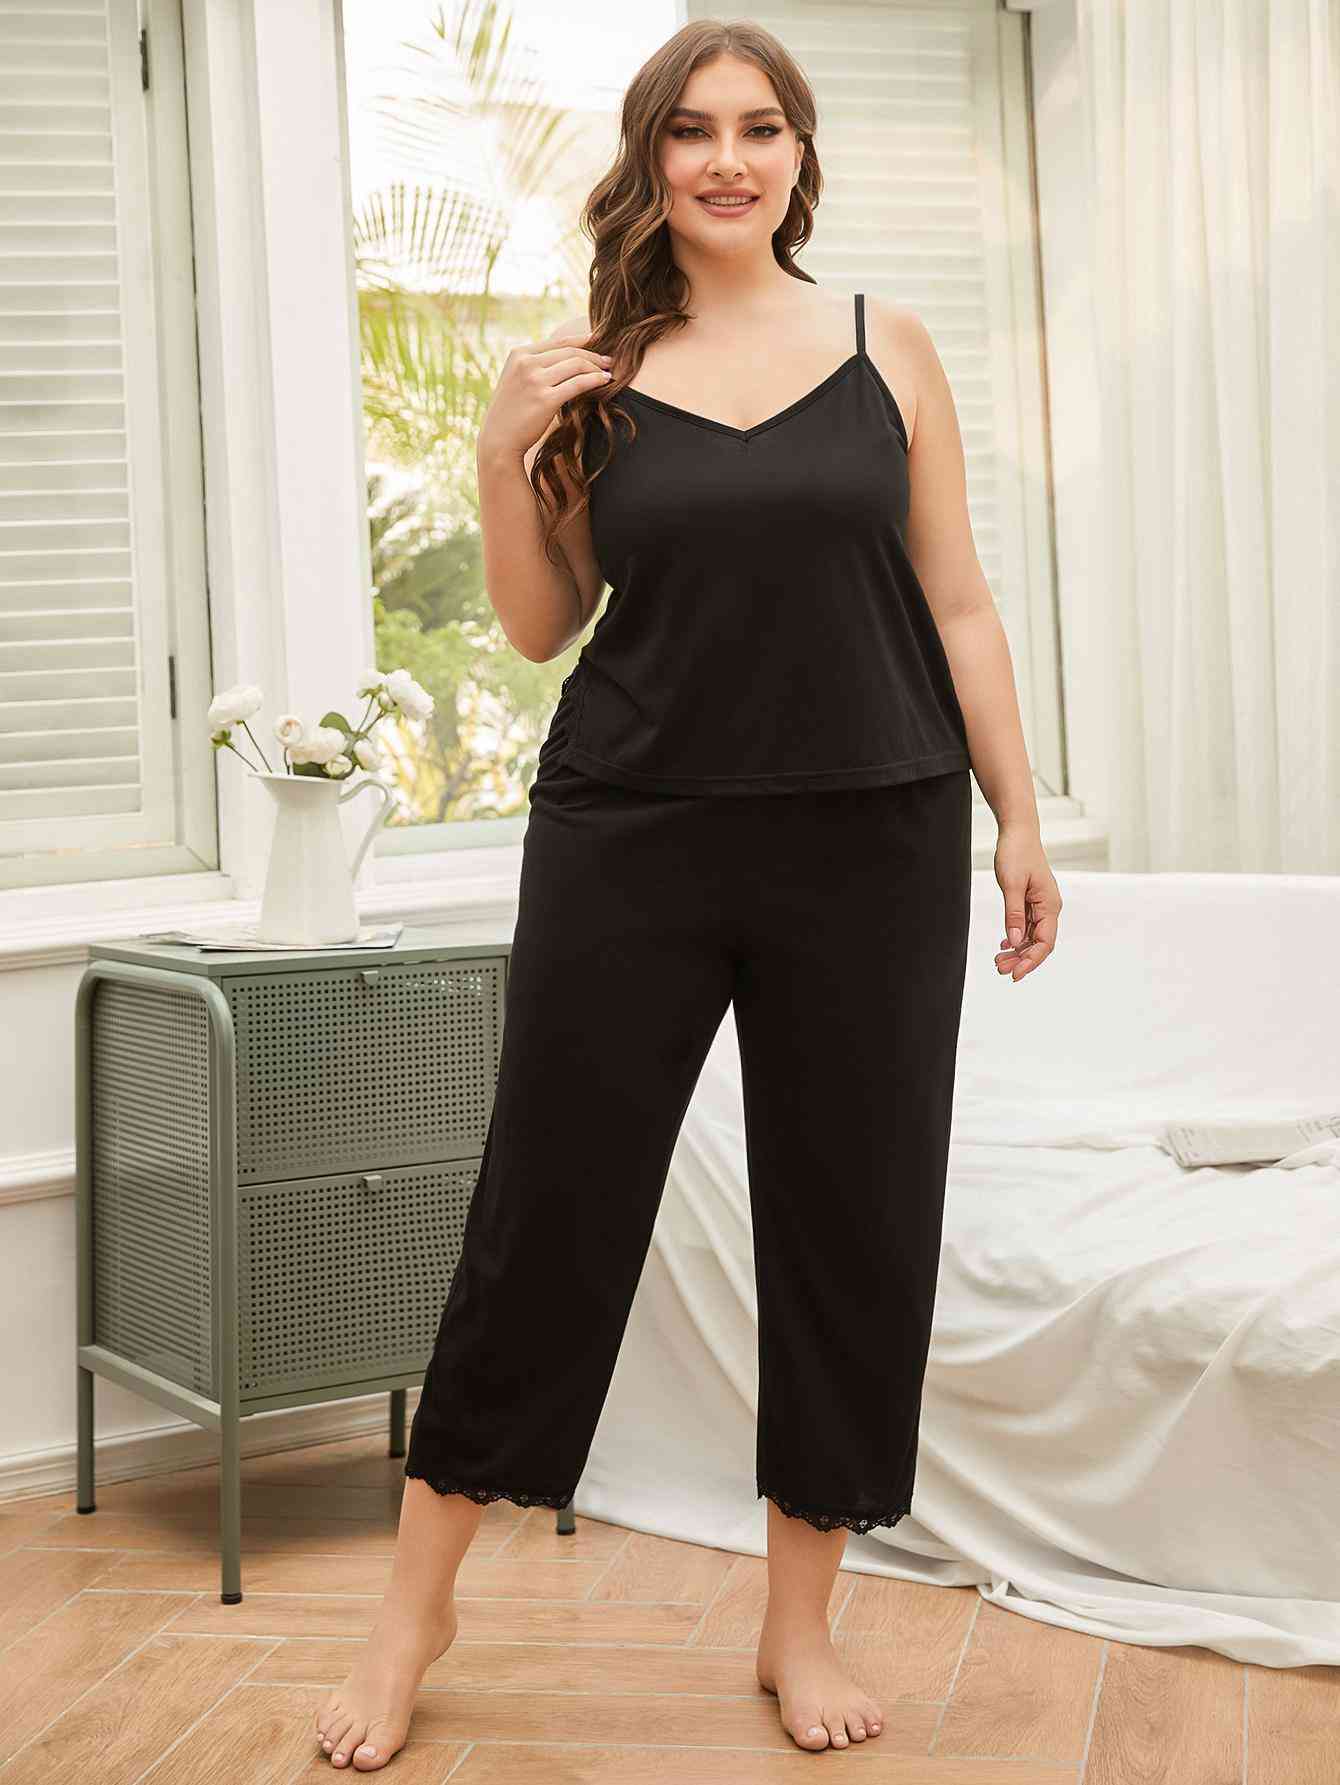 Model wearing black spaghetti strap pajama set